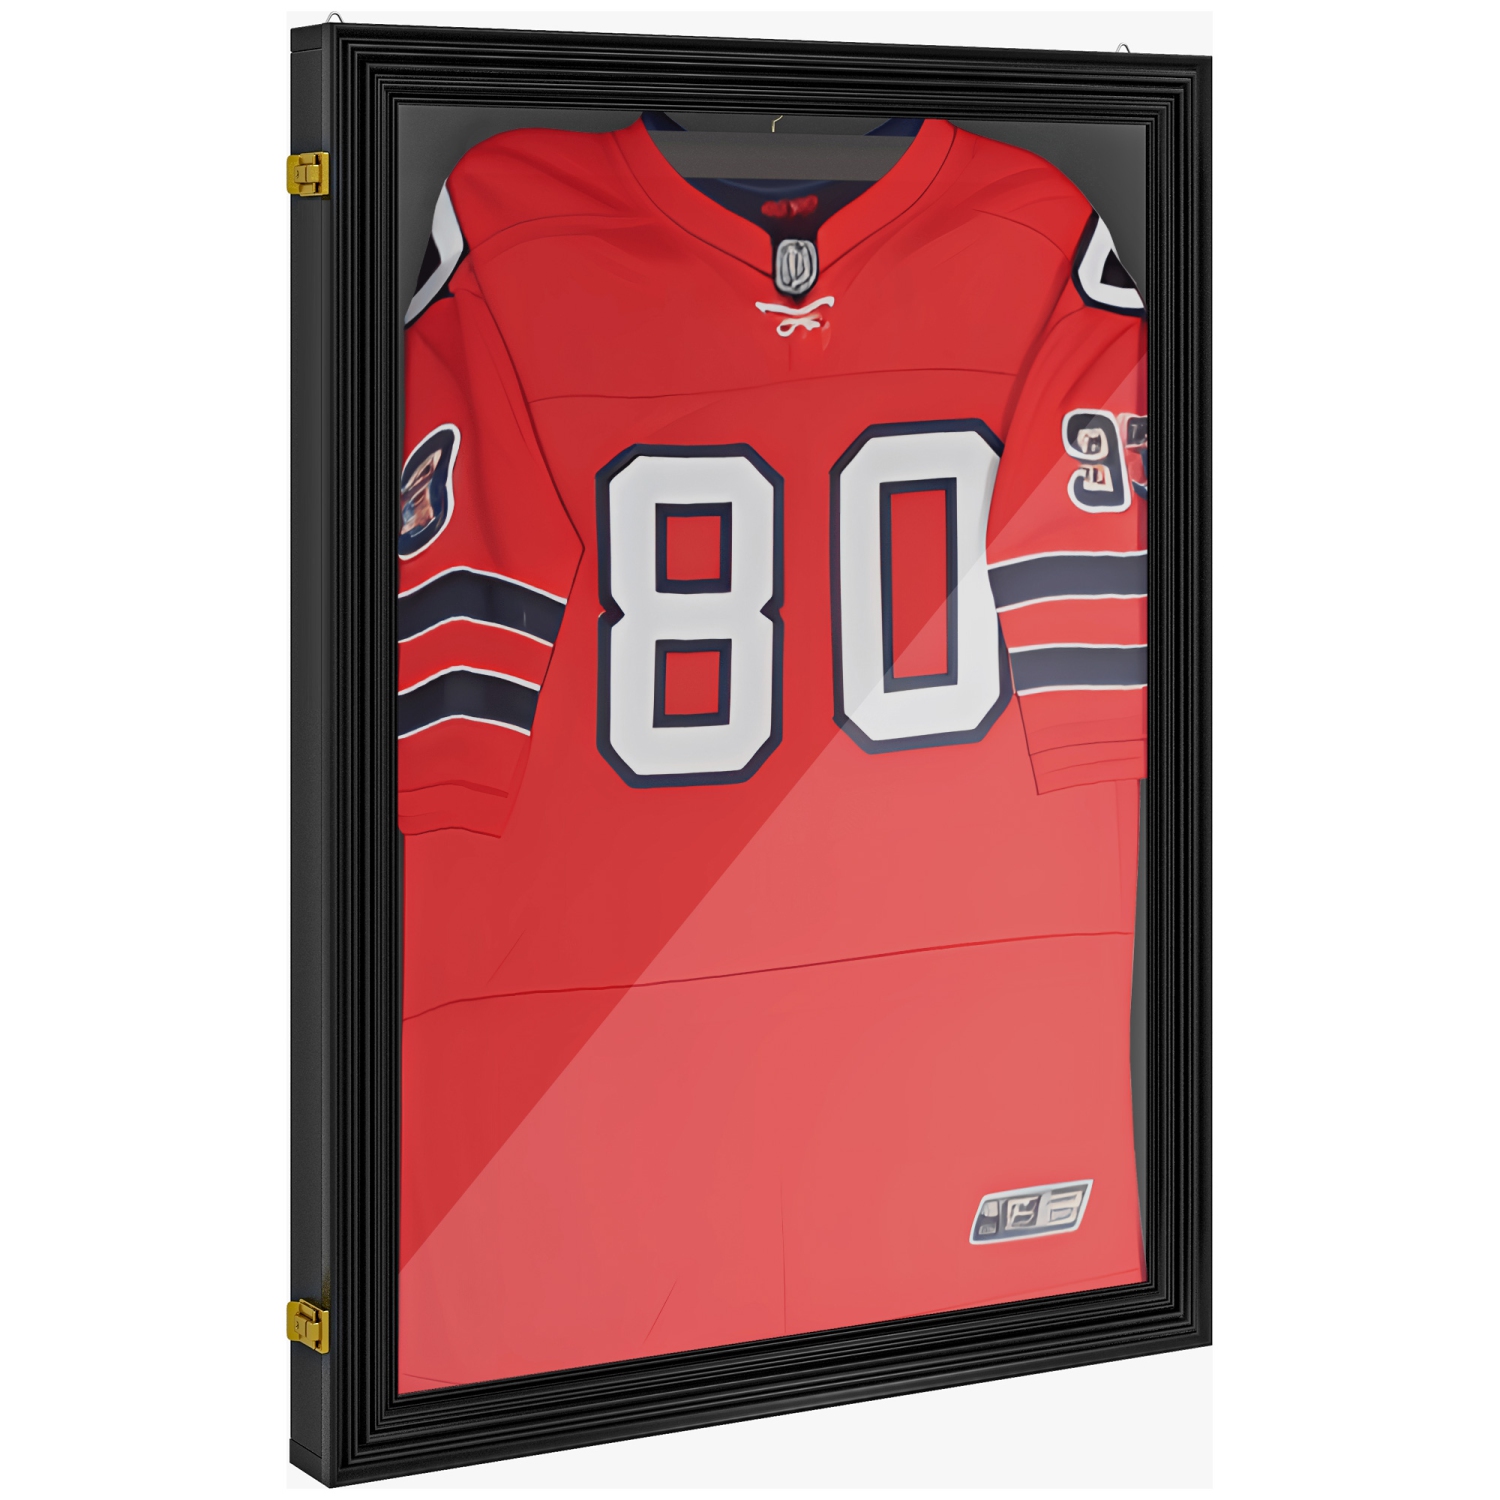 HOMCOM Jersey Display Frame Case, Acrylic Sports Shirt Shadow Box for Basketball Football Baseball, 23.5" x 31.5", Black